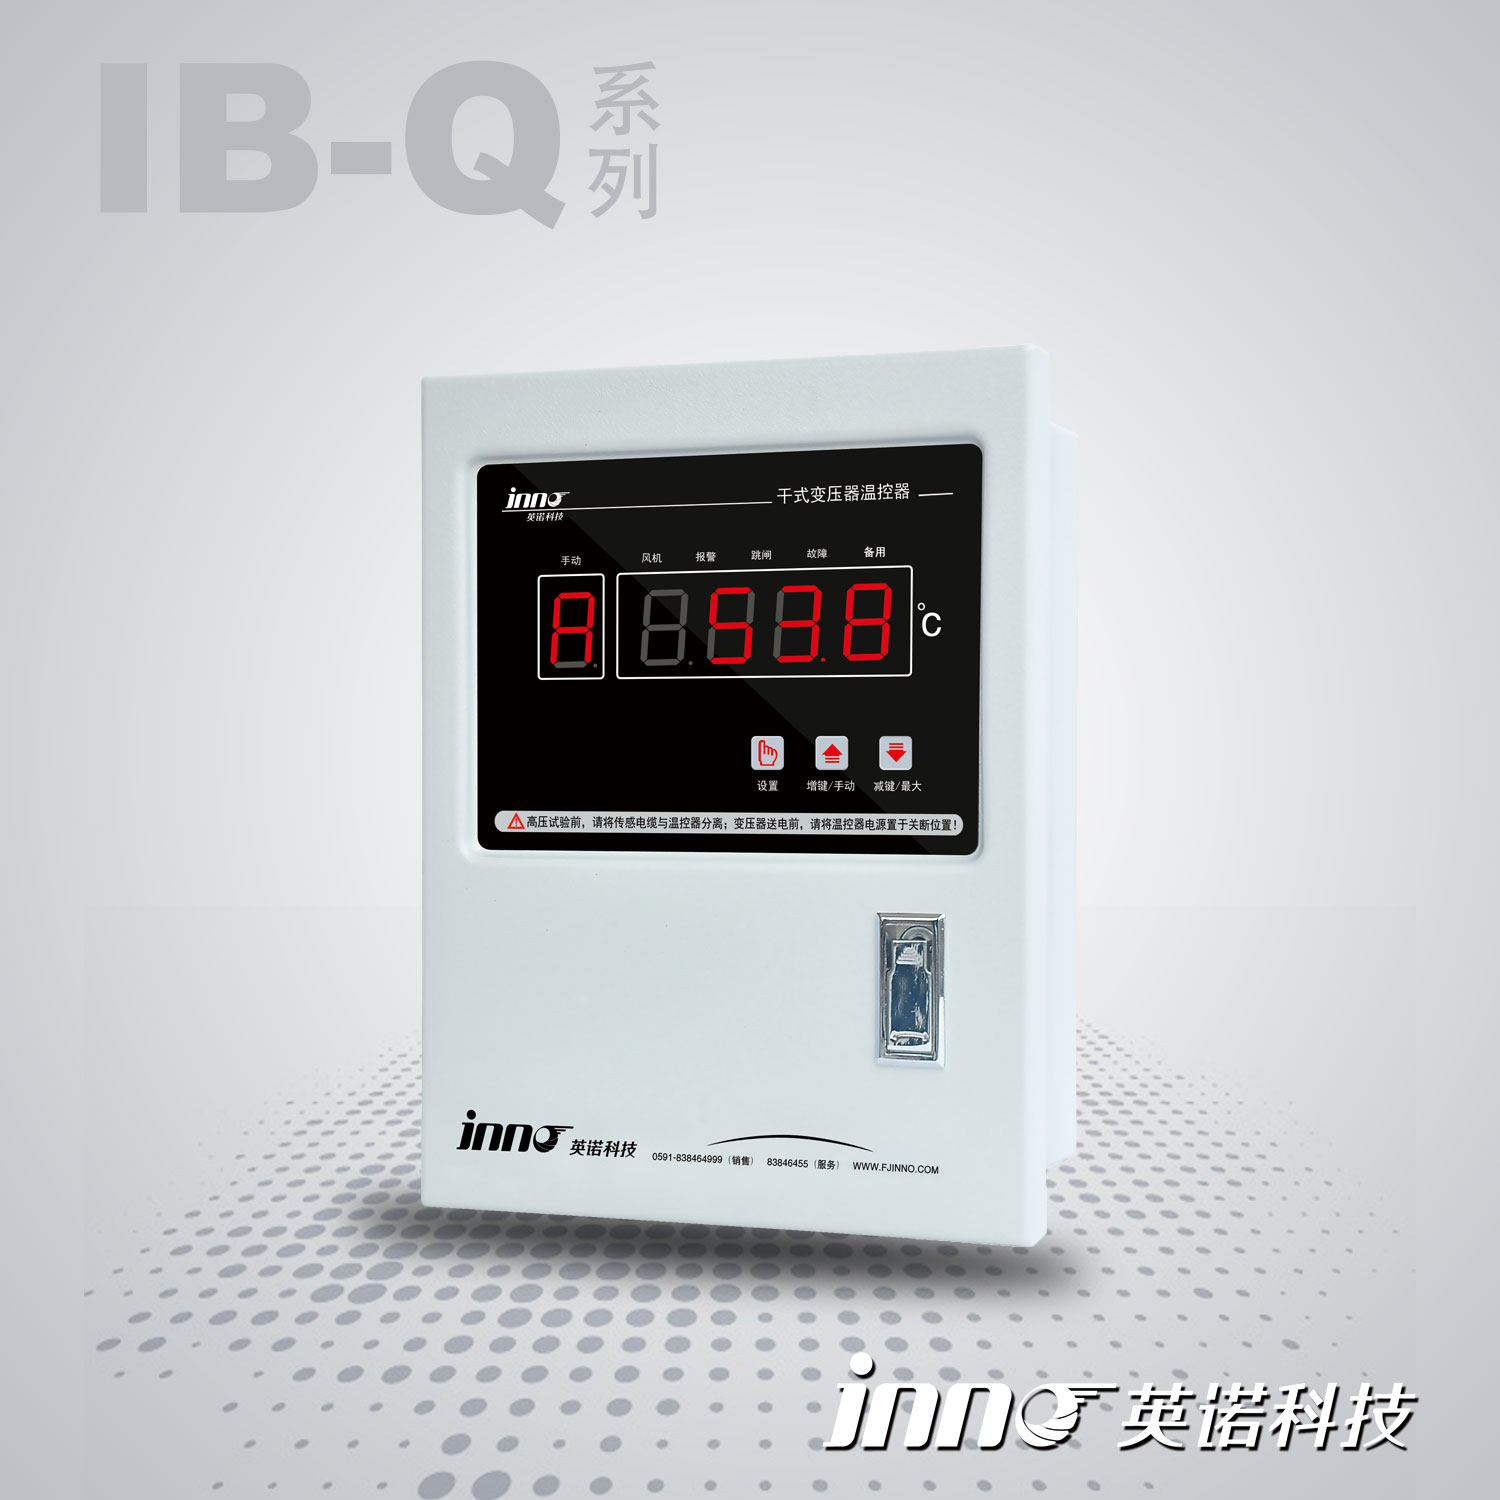 IB-Q201 干式变压器温控器